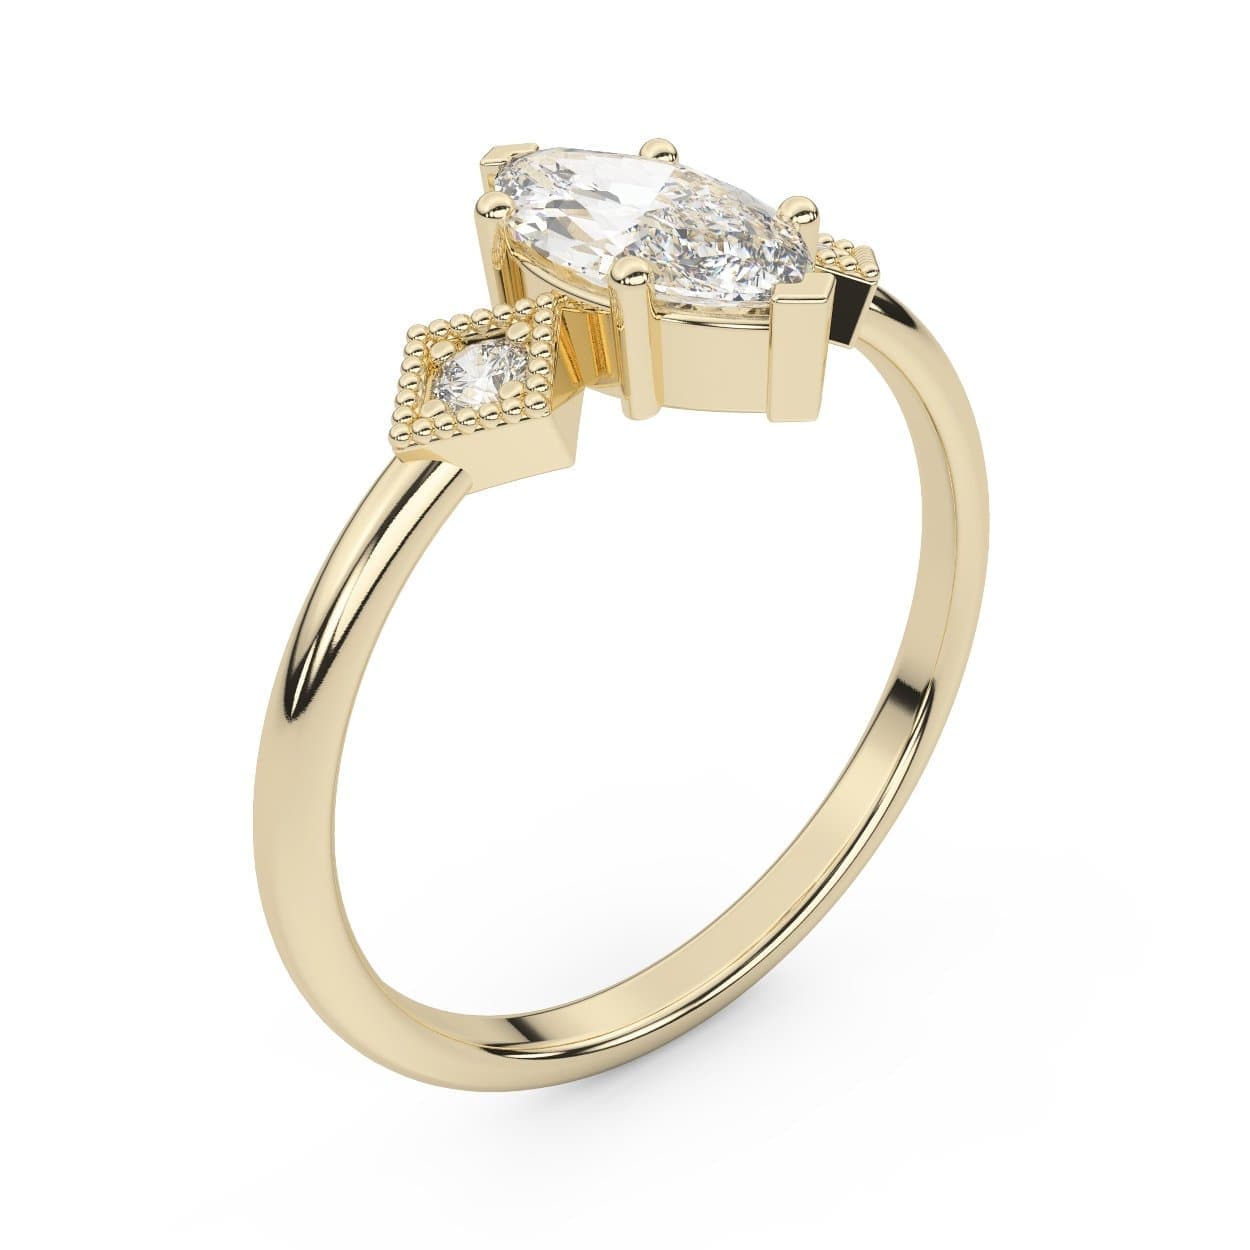 Art Deco Marquise Cut Moissanite 3-Stone Engagement Ring